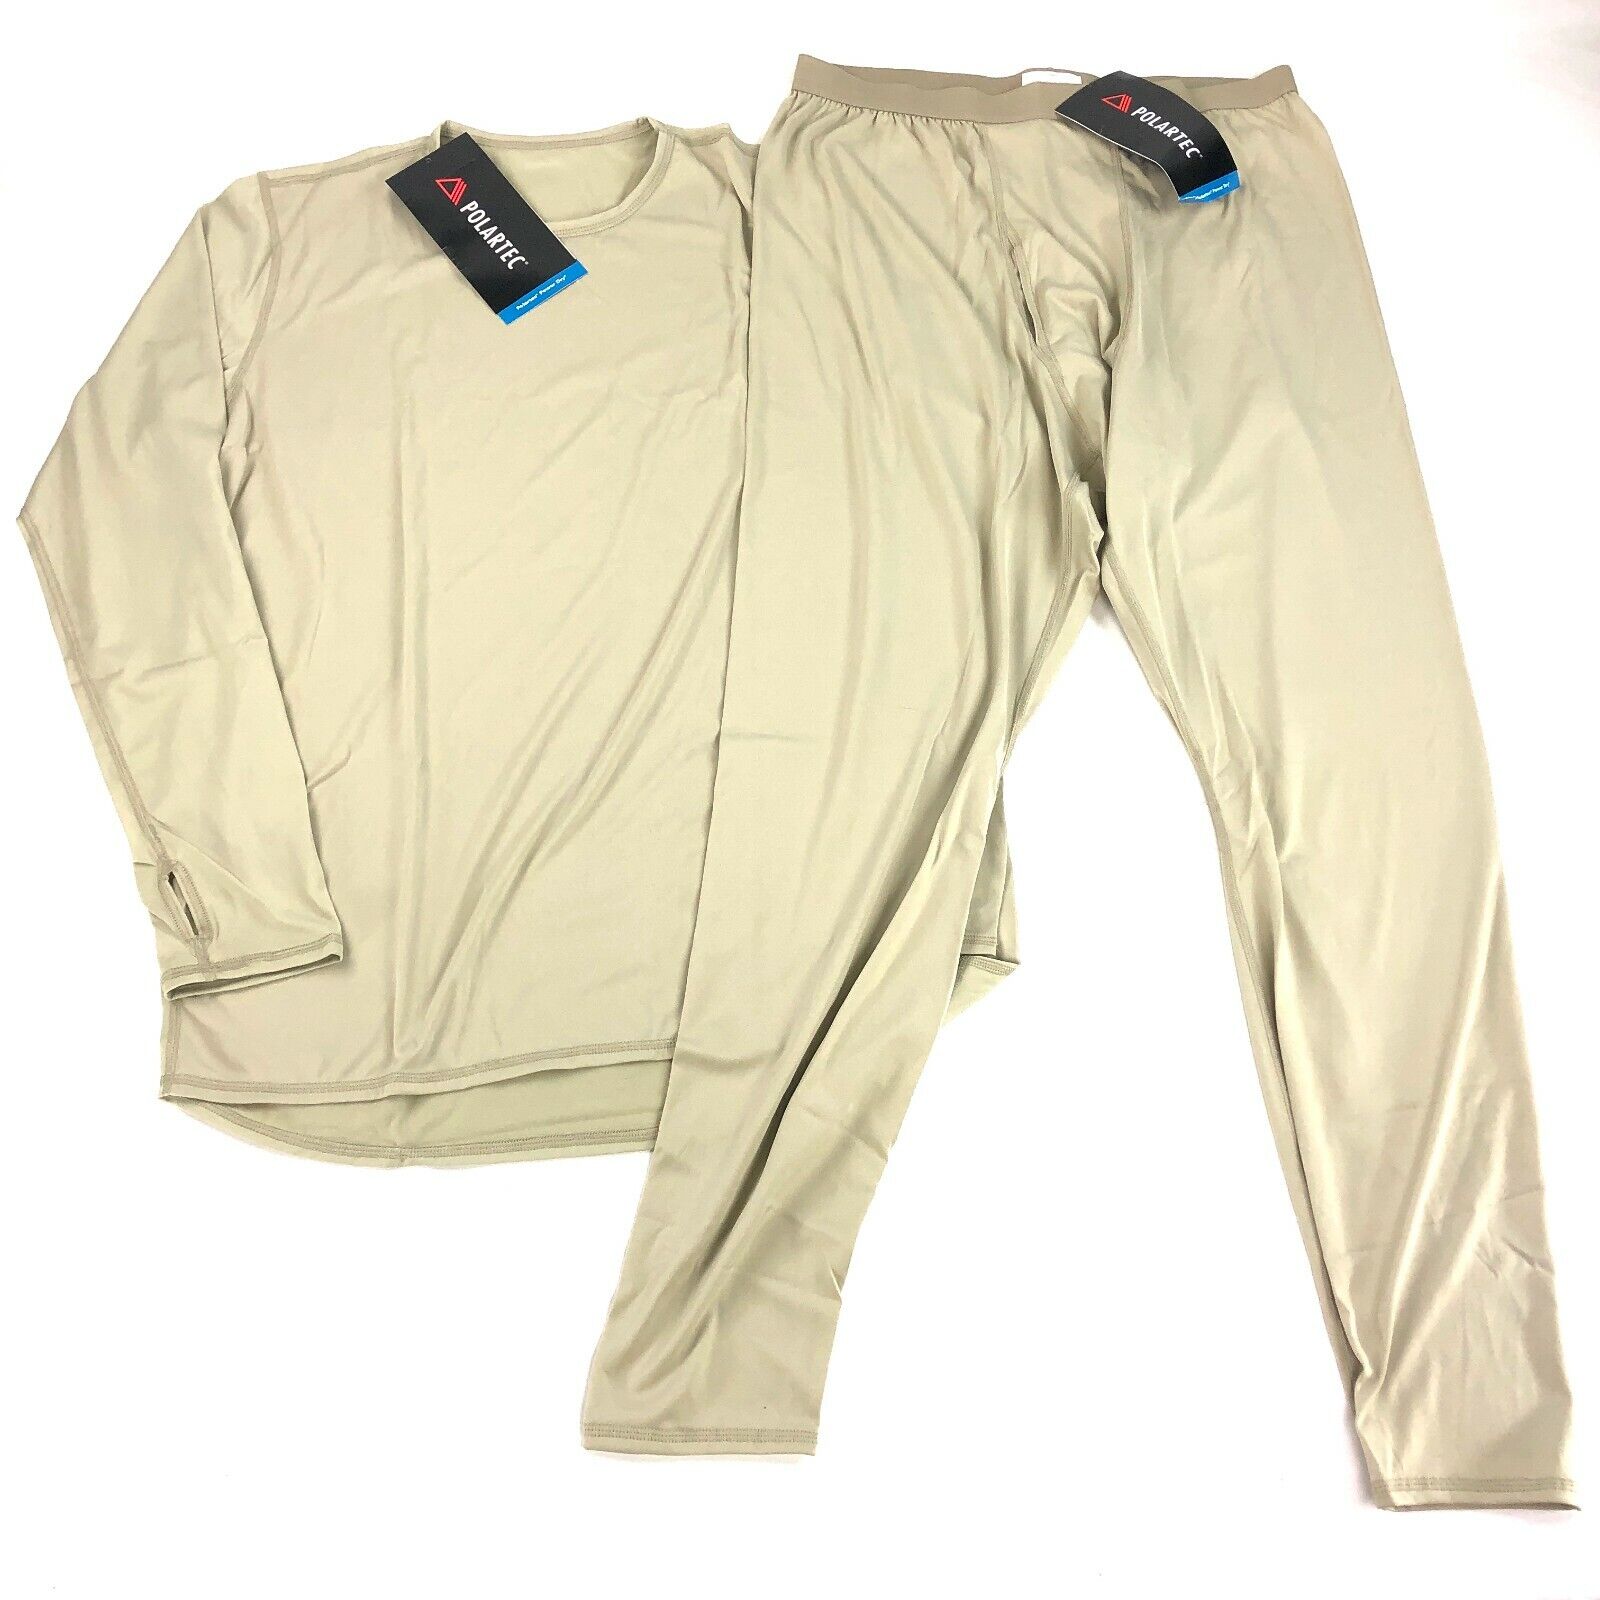 POLARTEC Level 1 Shirt & Pants Set, LARGE LONG Undershirt Power Dry Base Layer